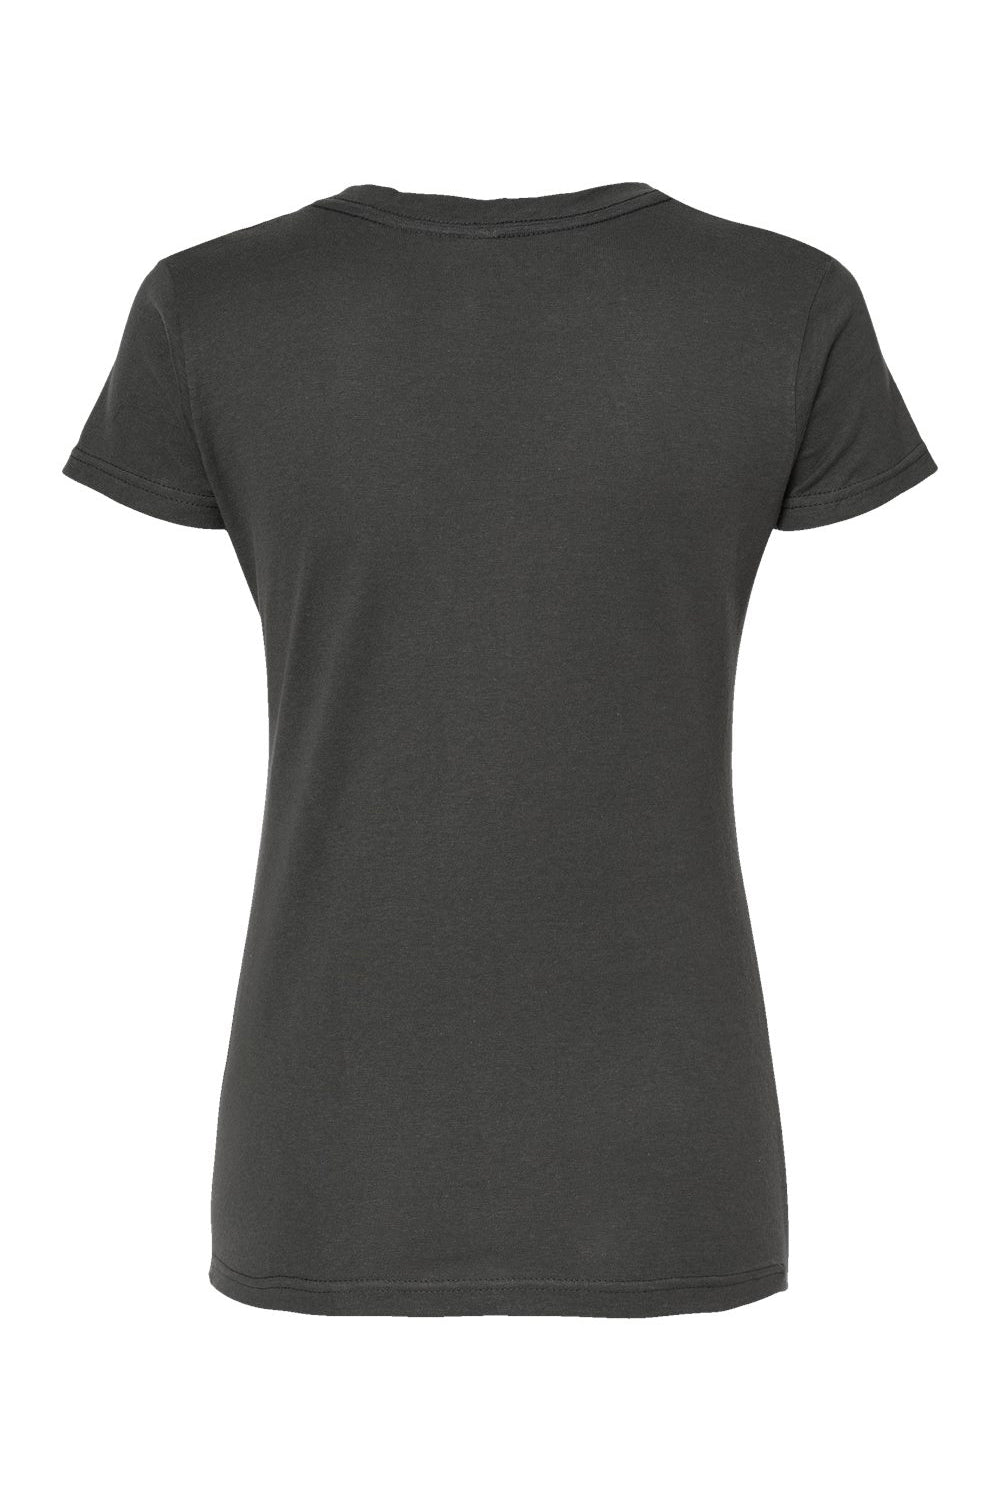 Tultex 214 Womens Fine Jersey Short Sleeve V-Neck T-Shirt Charcoal Grey Flat Back